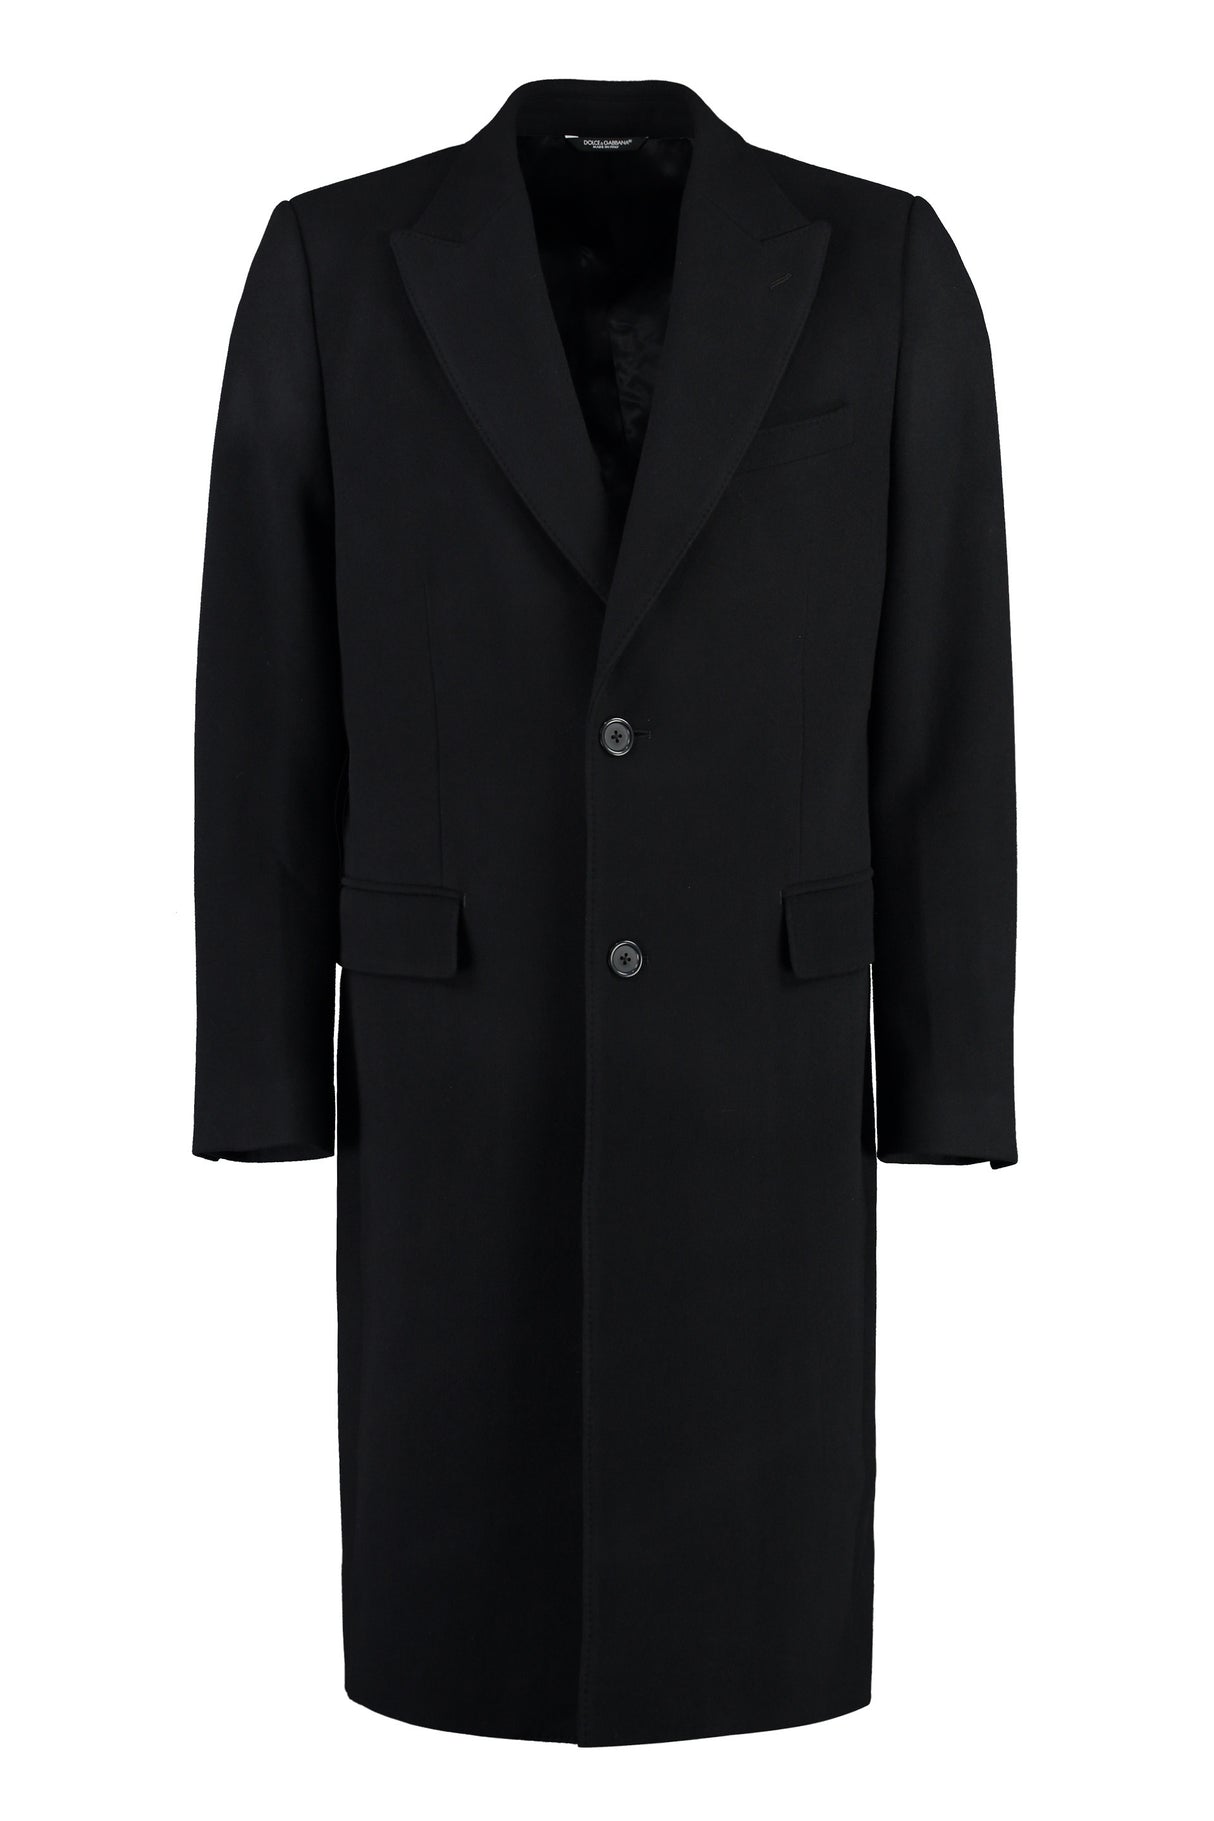 DOLCE & GABBANA Men's Essential Single-Breasted Wool Jacket in Black